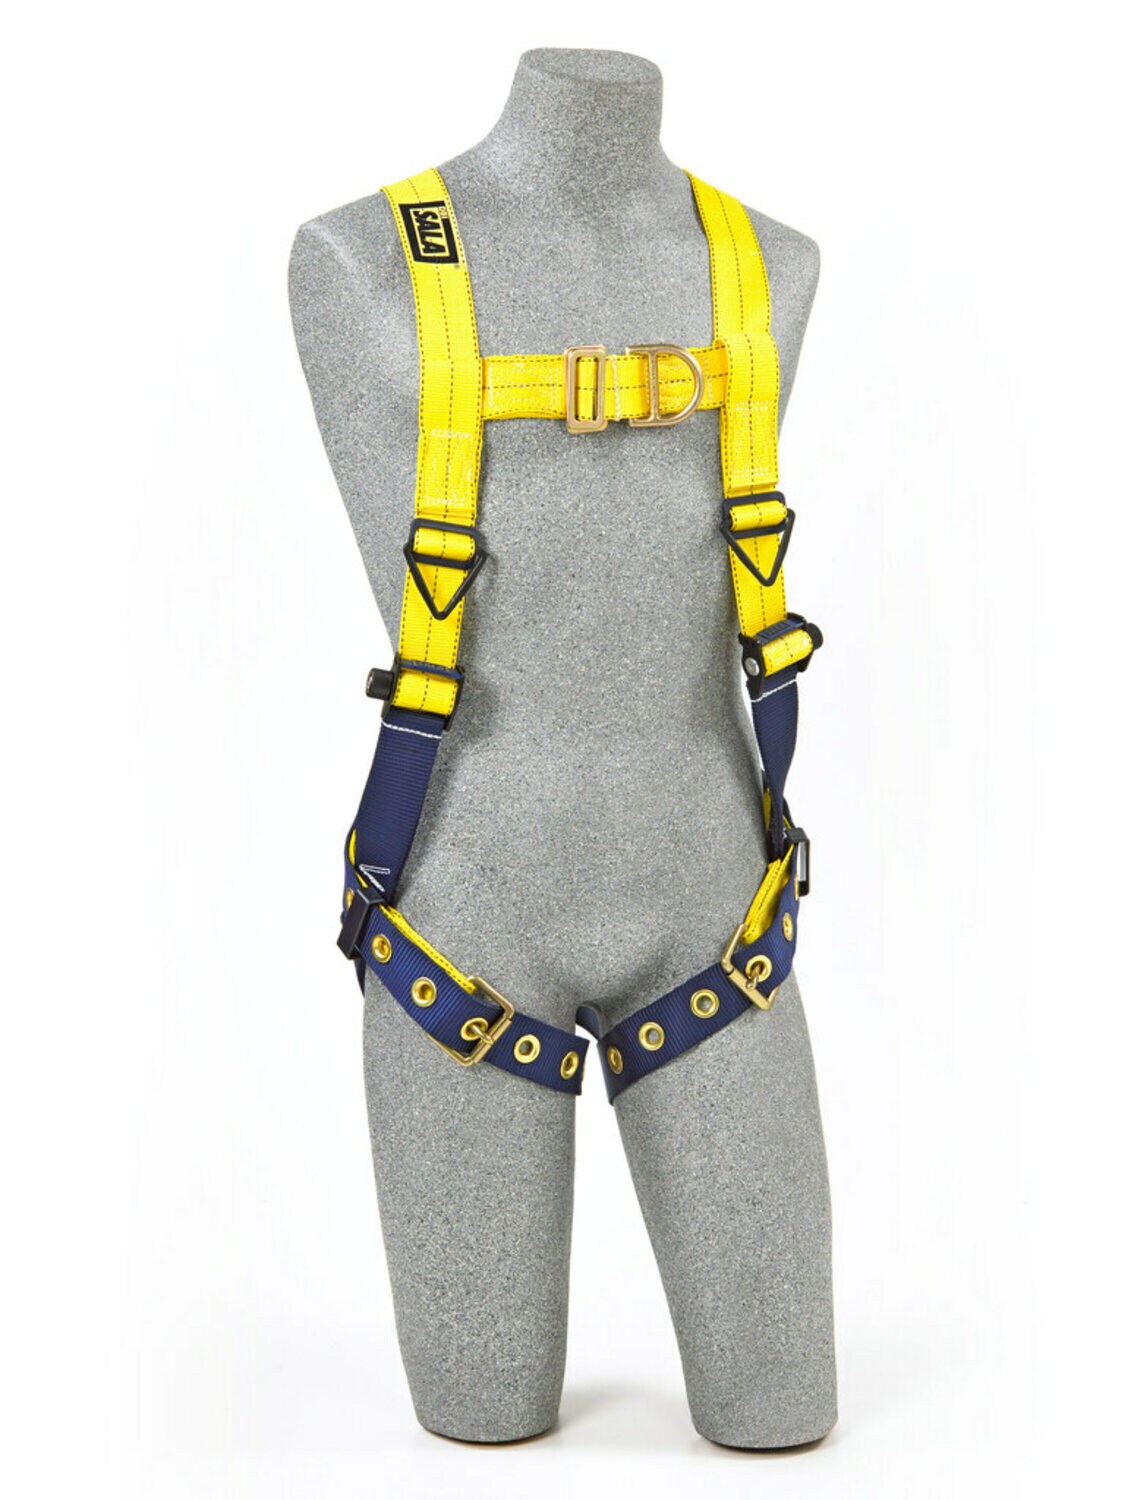 7100157089 - 3M DBI-SALA Delta Vest Climbing Safety Harness 1107800, Large